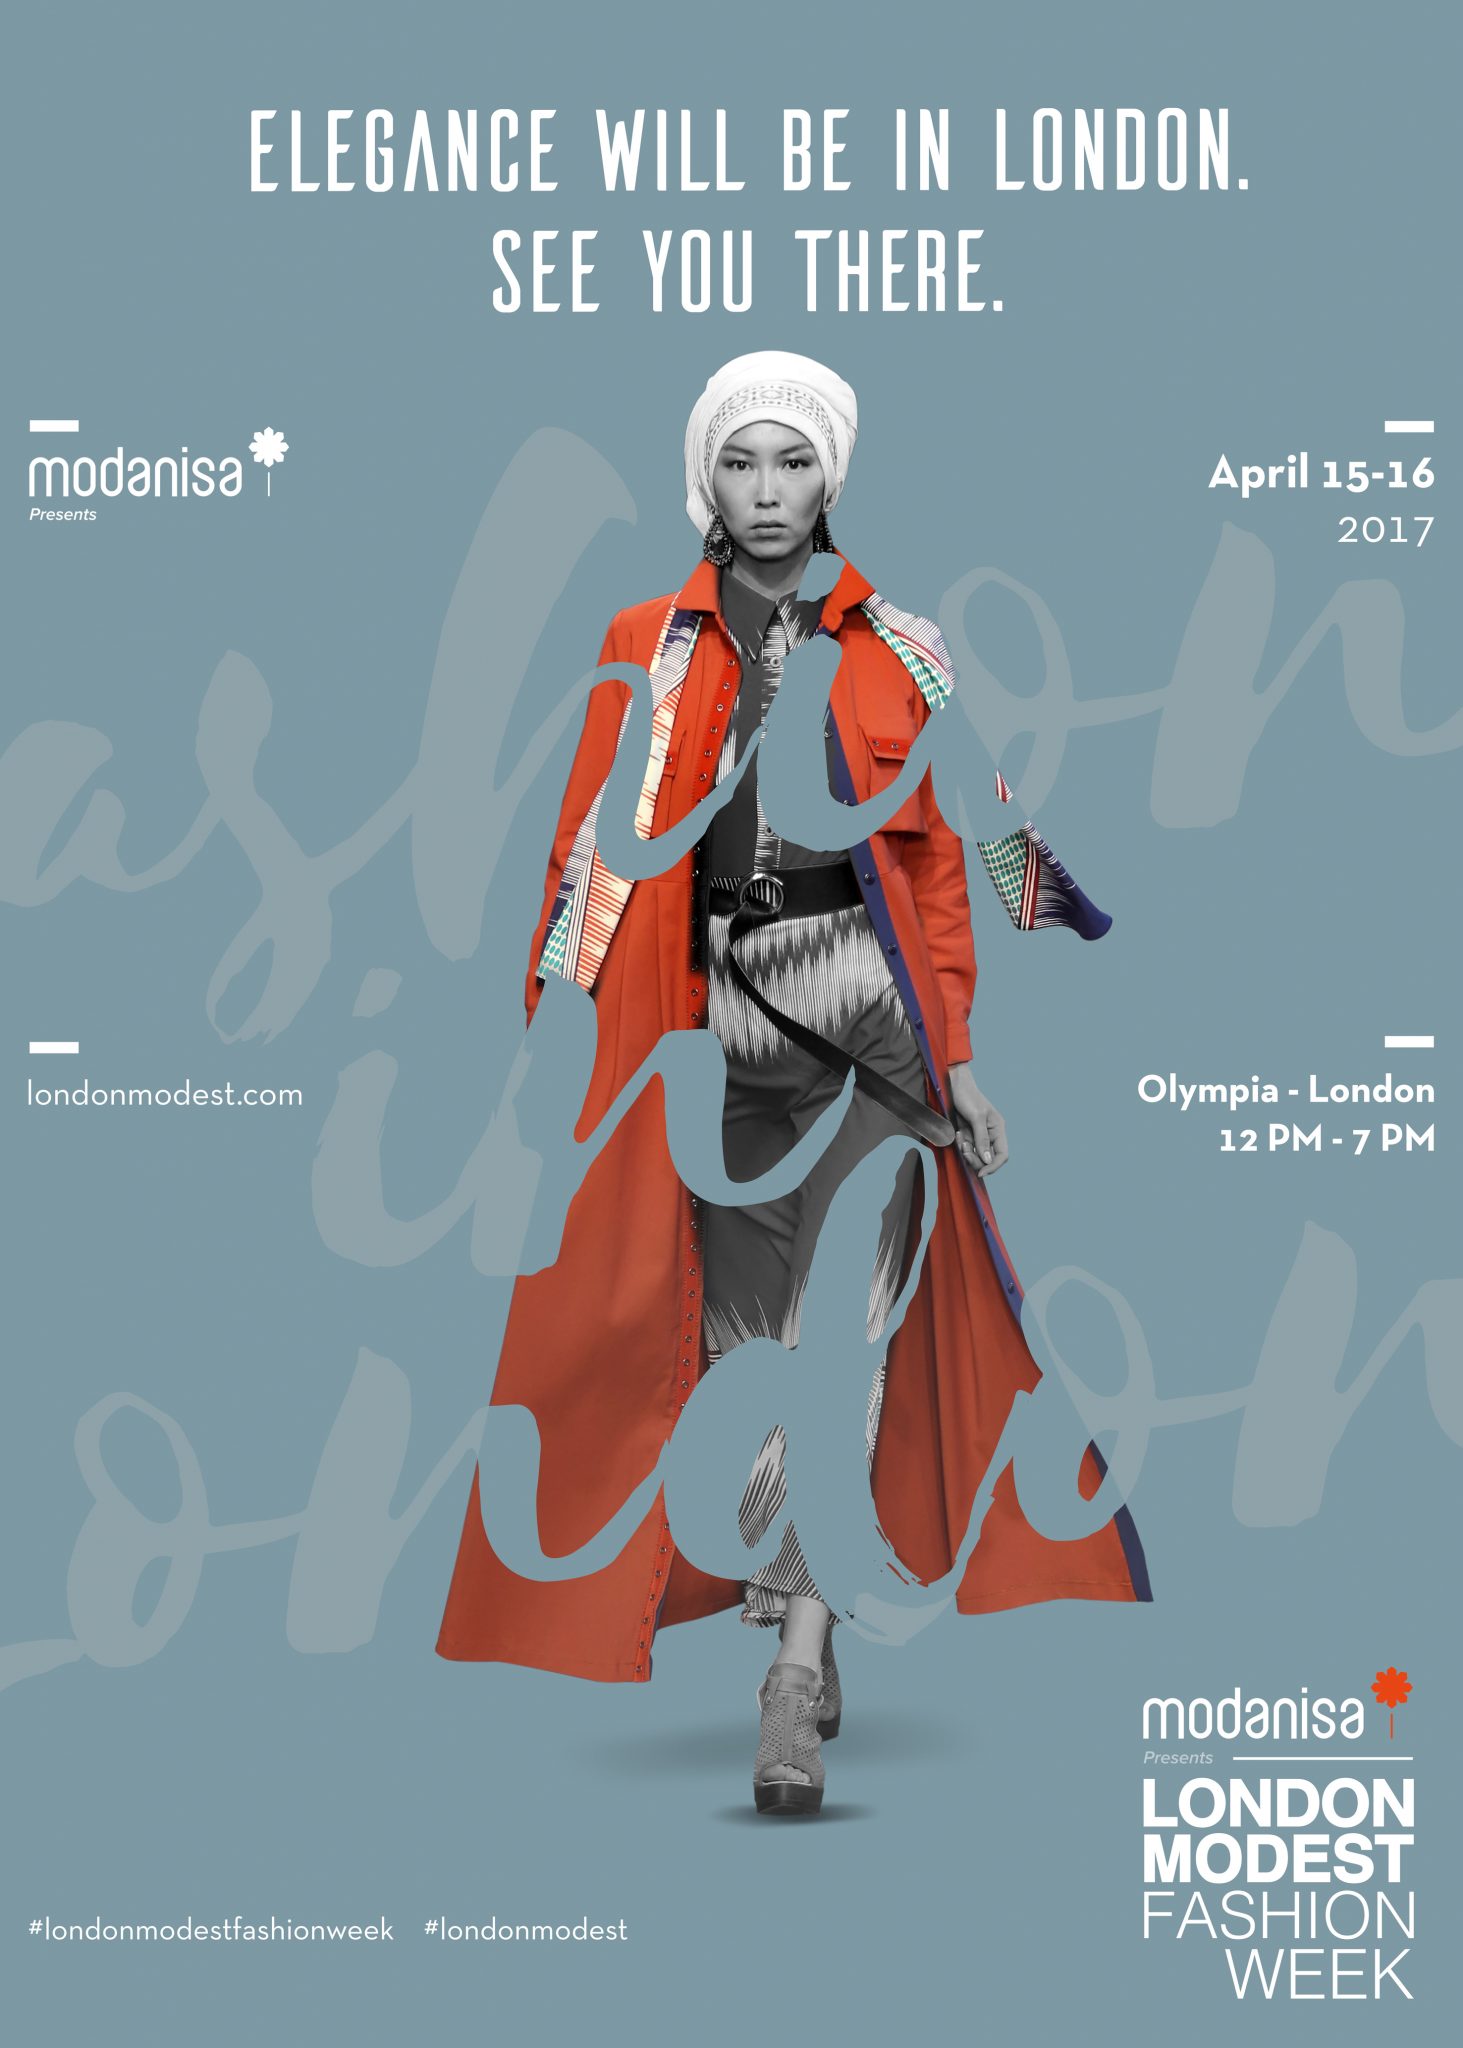 Modanisa Modest Fashion Week comes to London